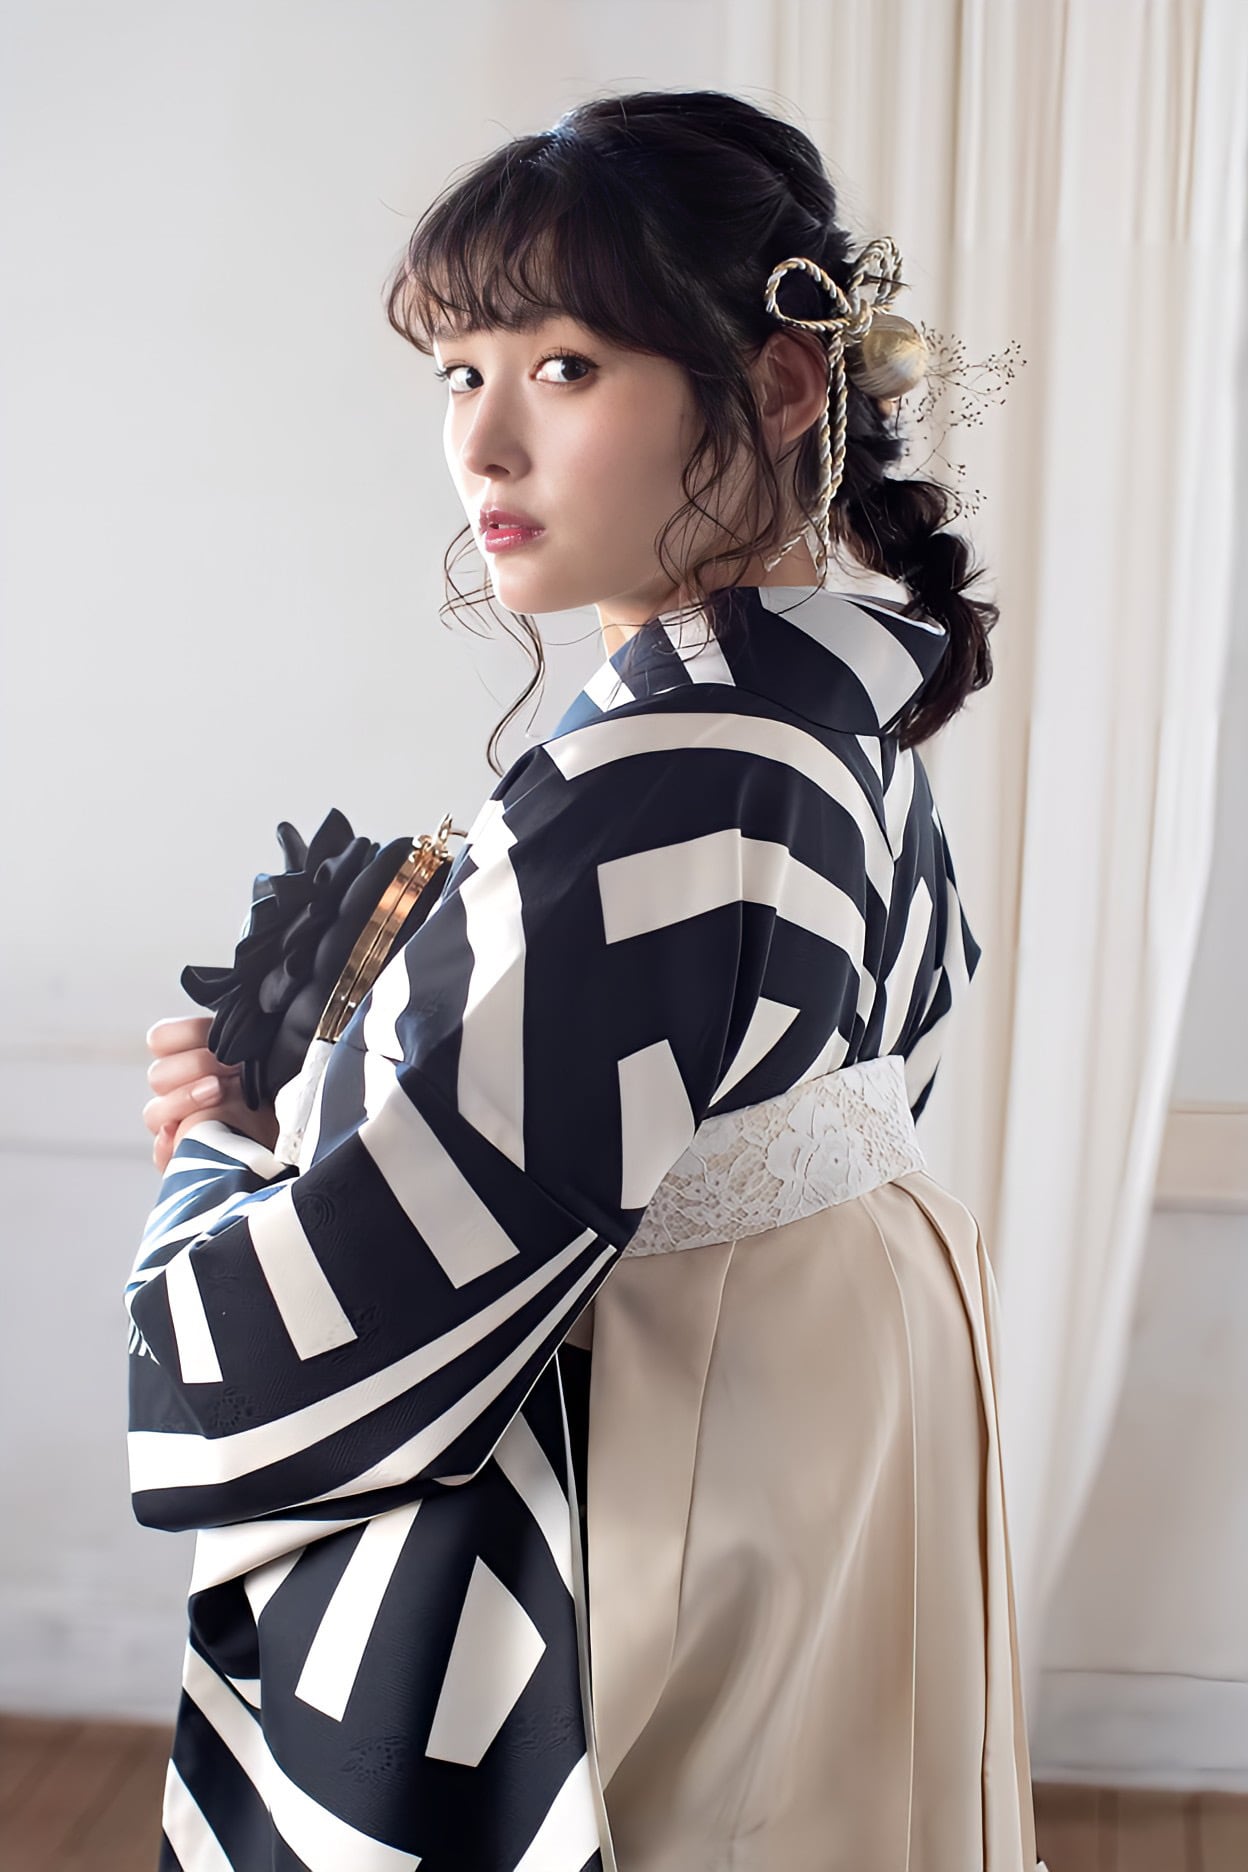 Kimono Sienne 卒業式袴3点セット 幾何学模様 二尺袖着物 袴 白黒×アイボリー 卒業式 | Kimono Sienne